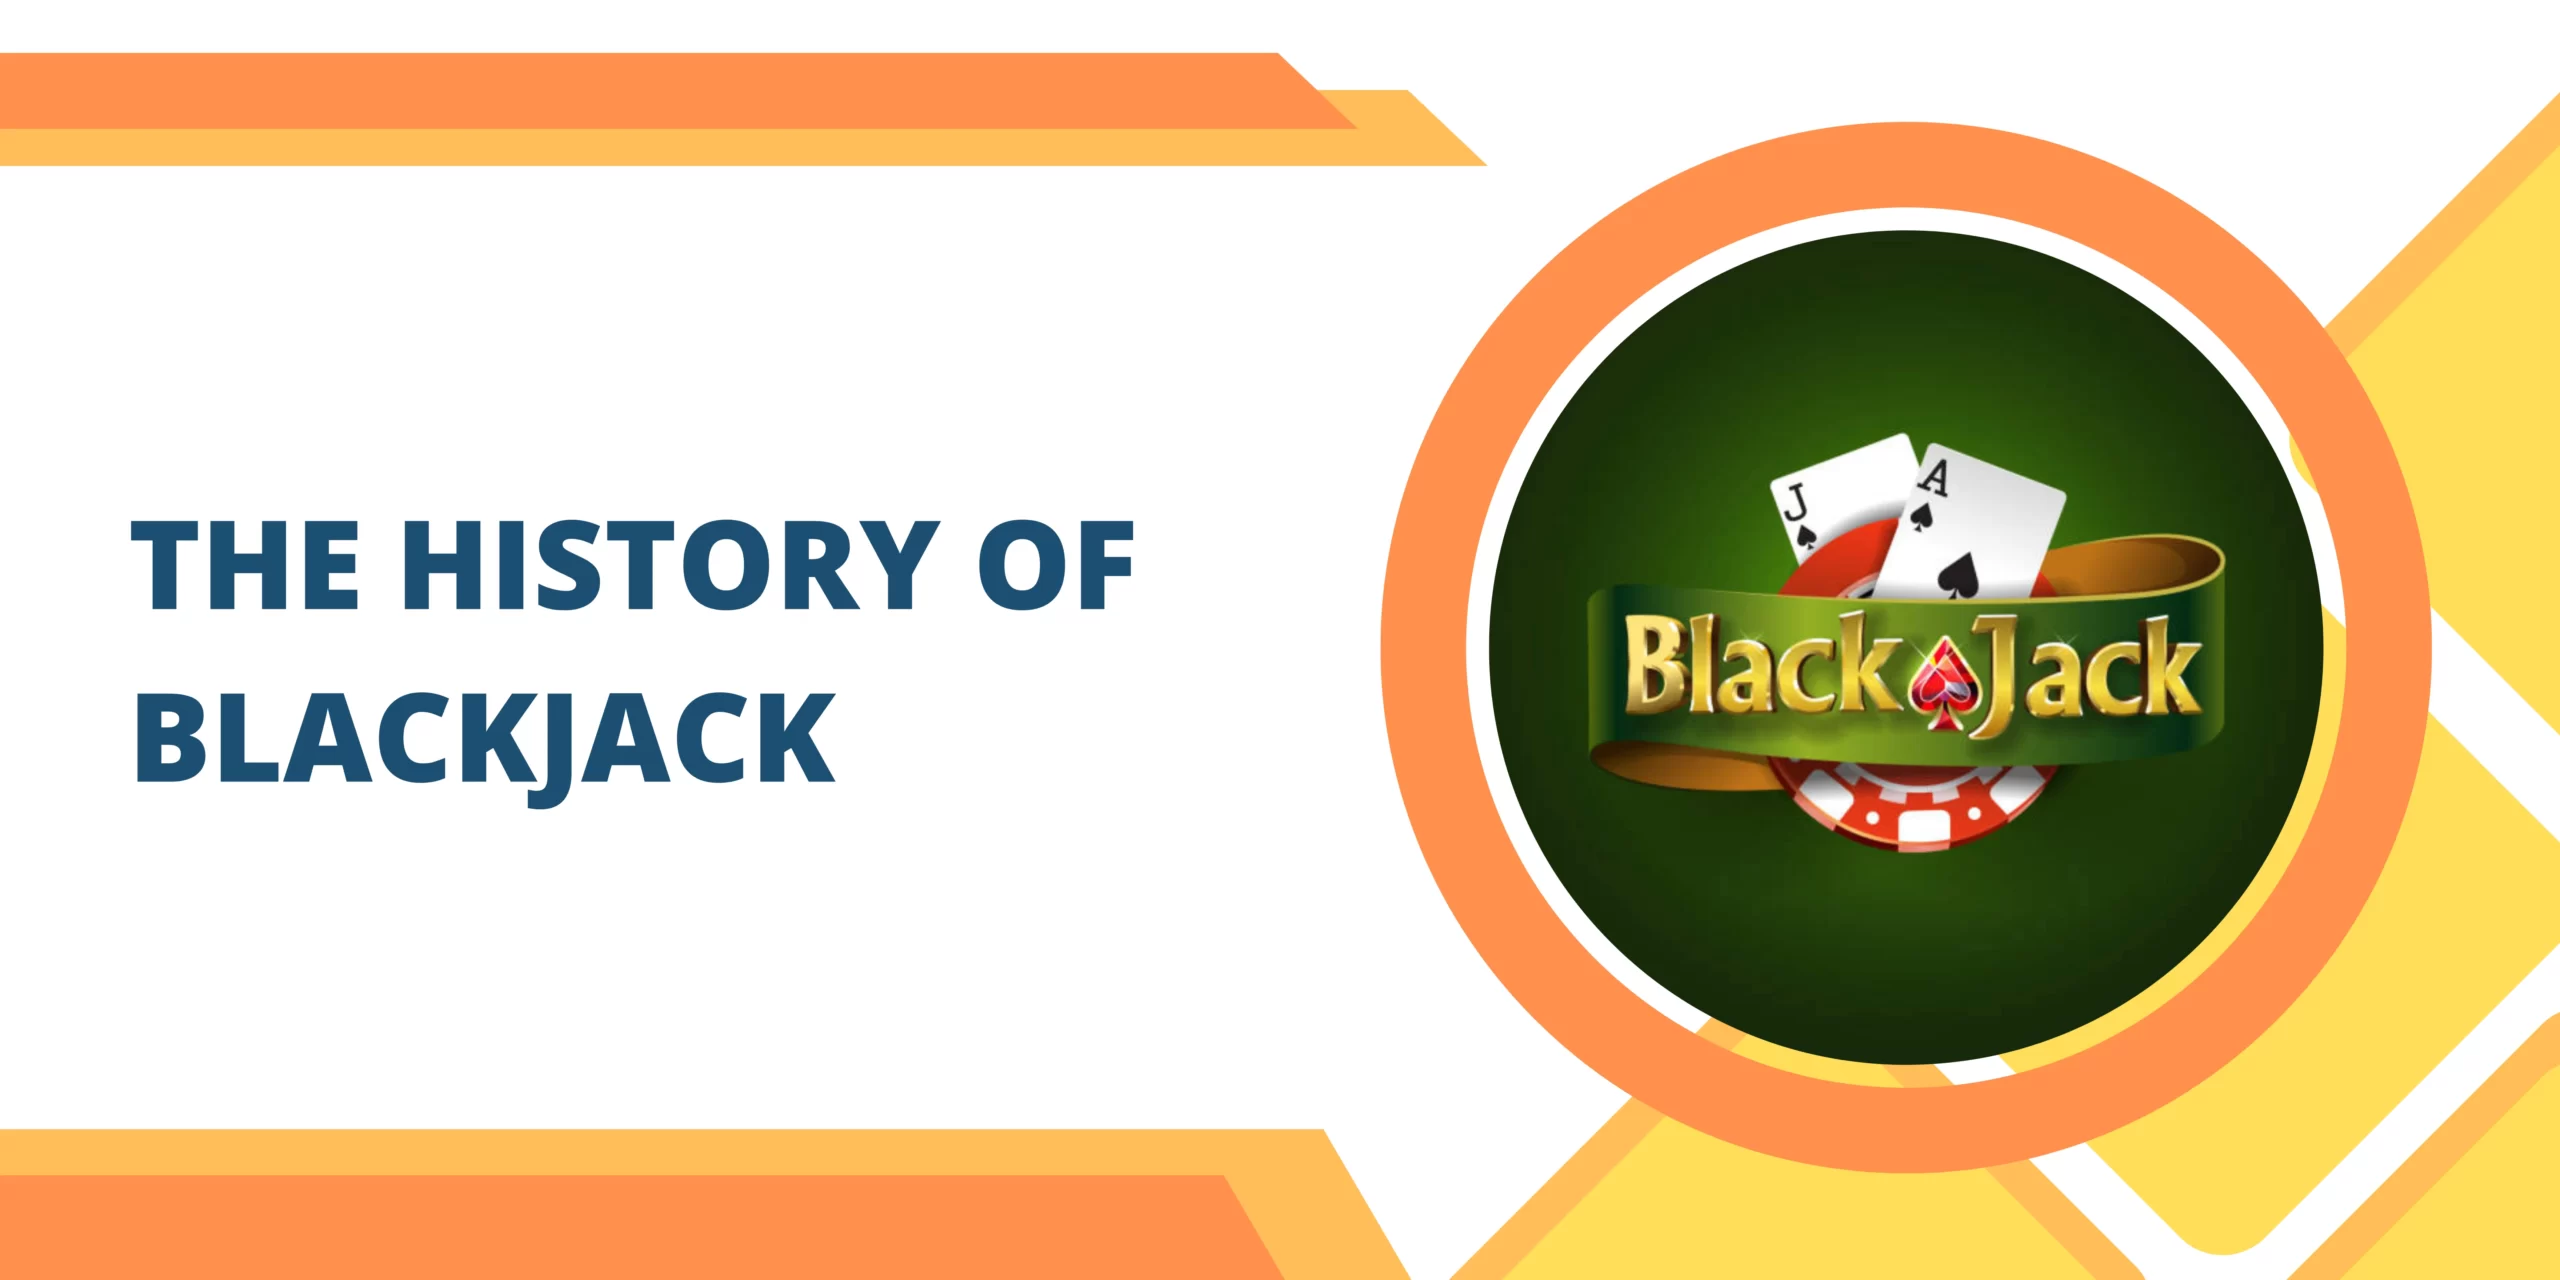 The History of BlackJack